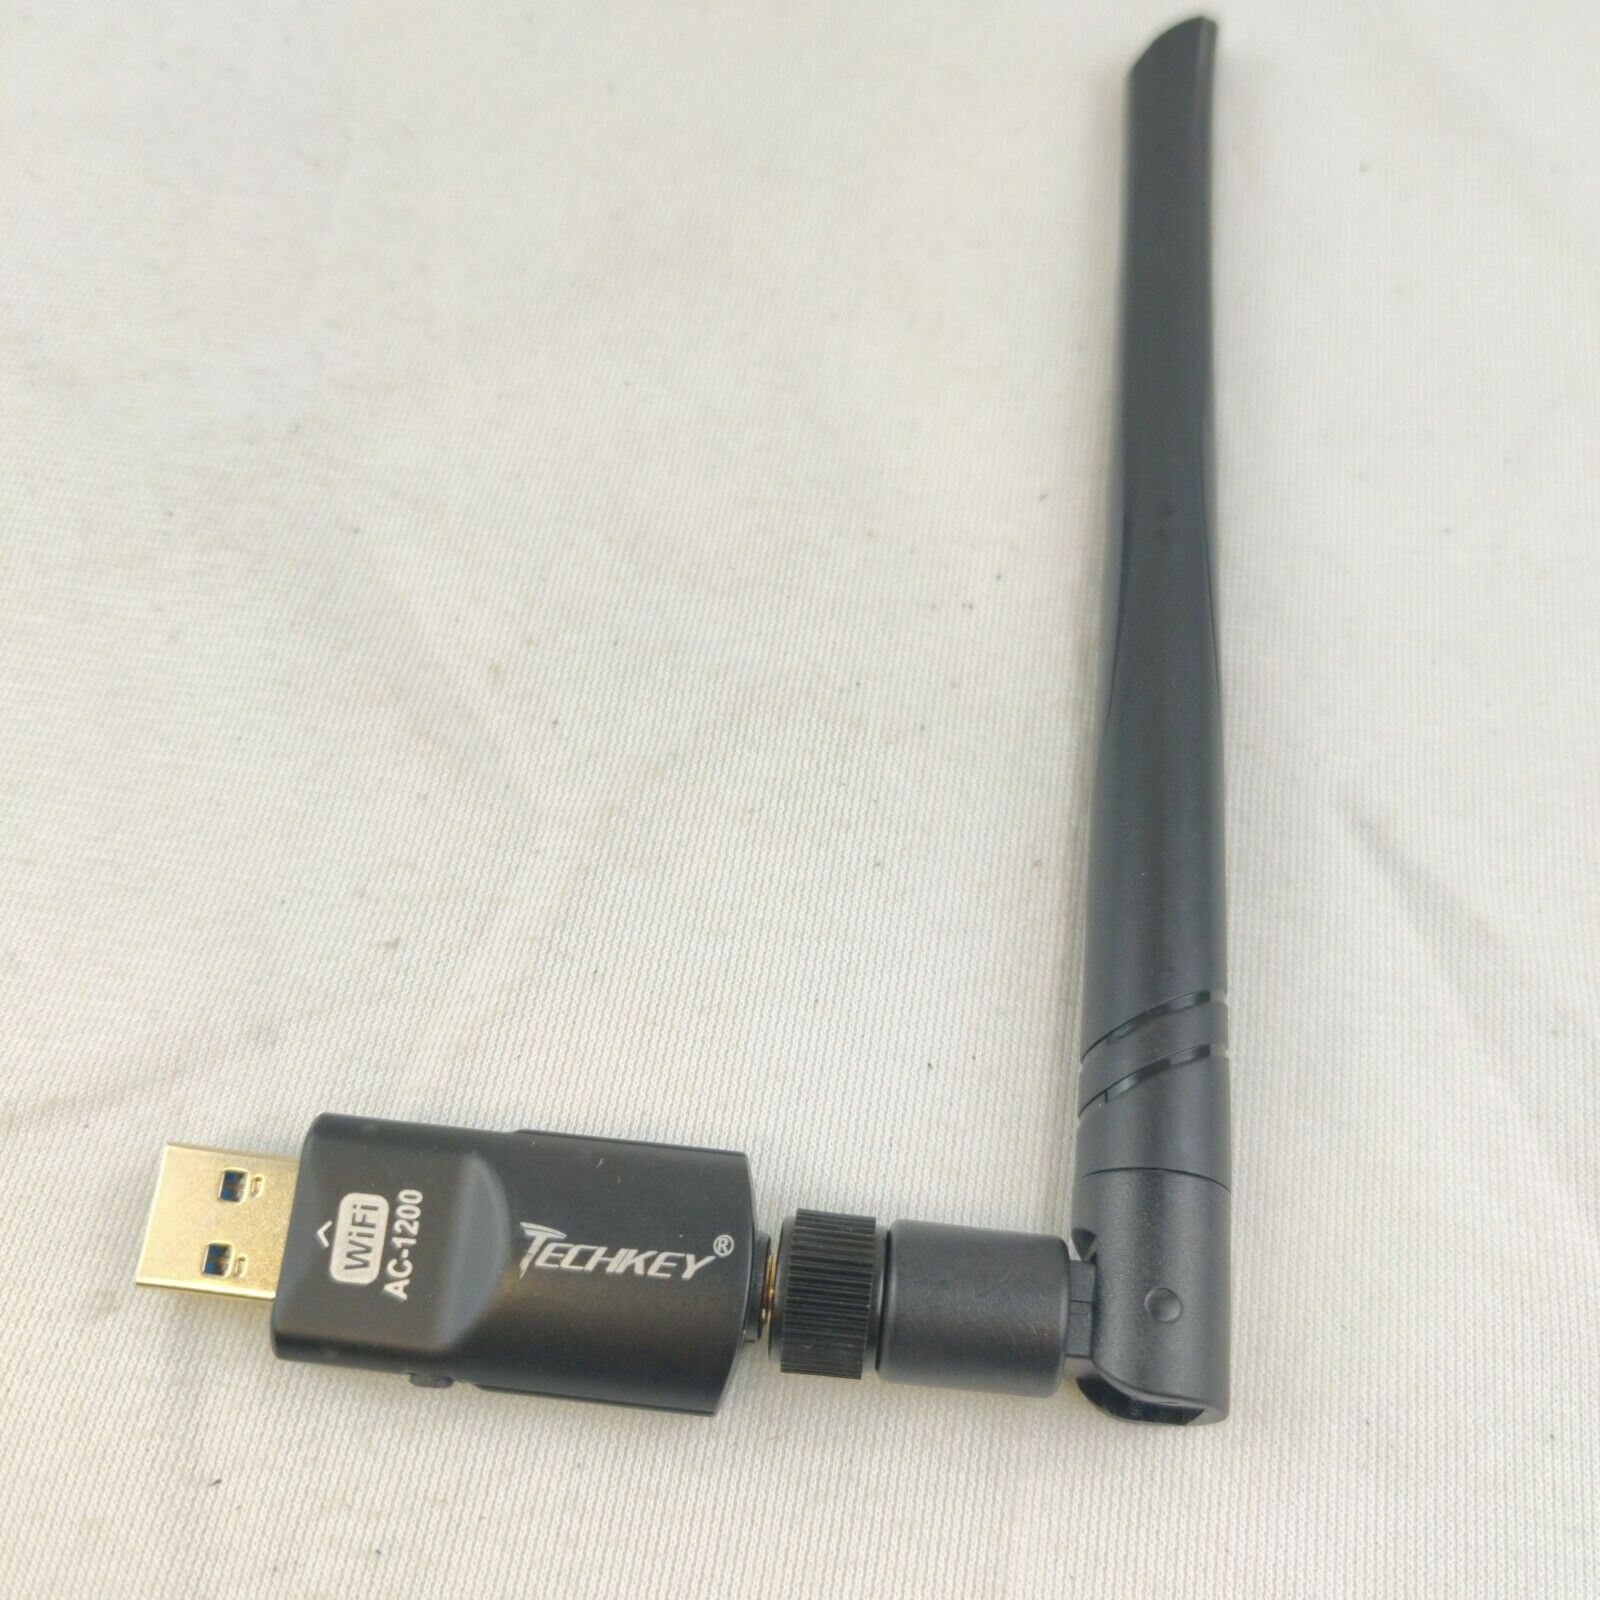 Dual Band Wireless USB Adapter Techkey Model AC-1200 TESTED